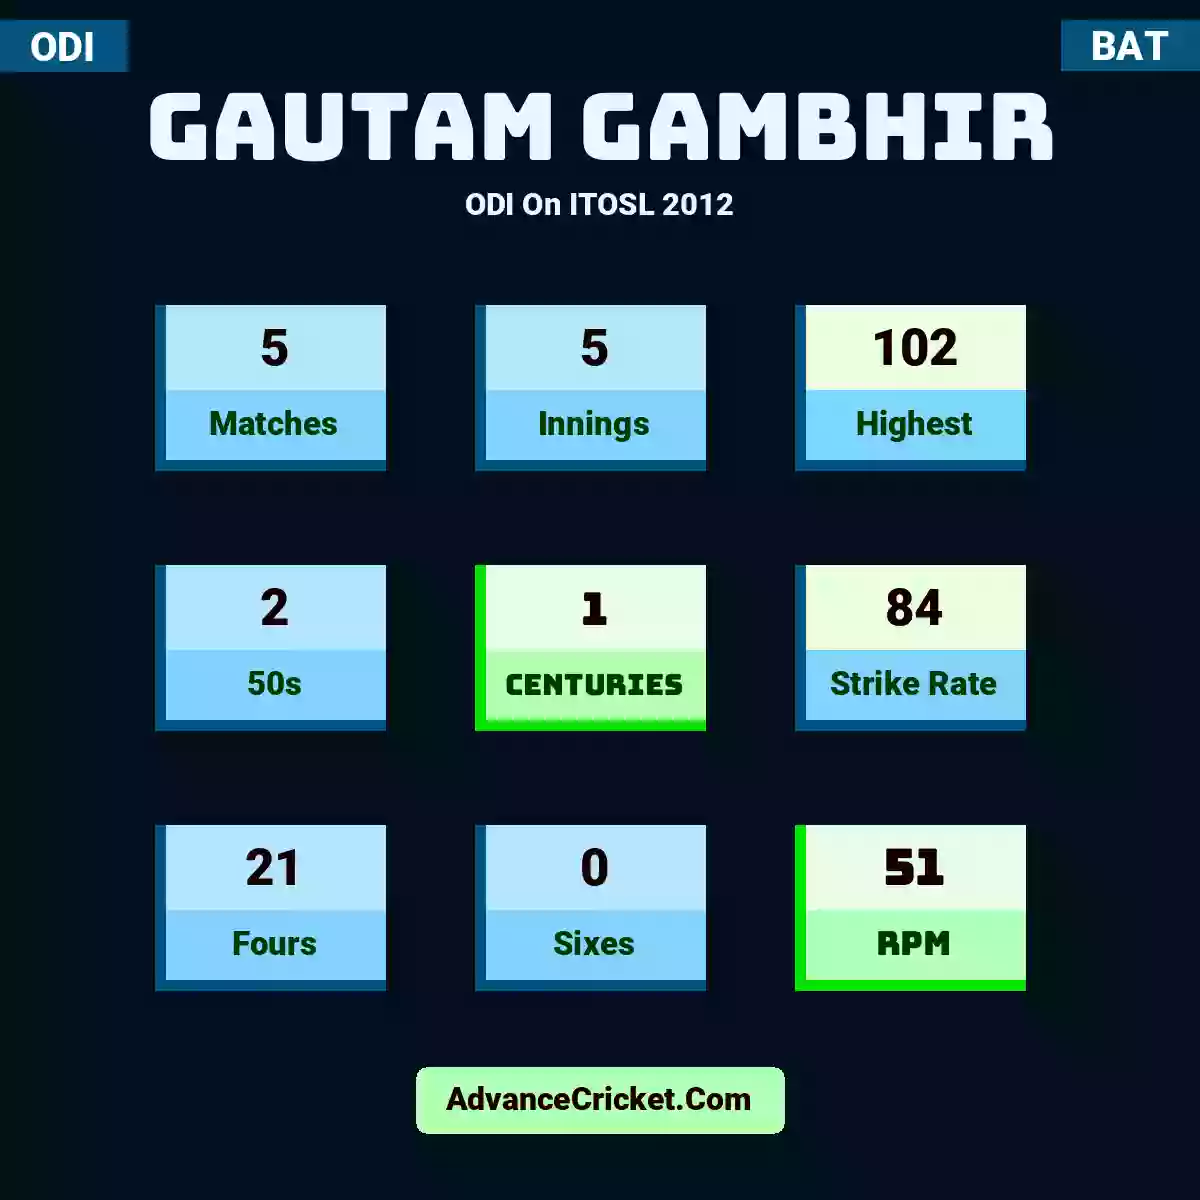 Gautam Gambhir ODI  On ITOSL 2012, Gautam Gambhir played 5 matches, scored 102 runs as highest, 2 half-centuries, and 1 centuries, with a strike rate of 84. G.Gambhir hit 21 fours and 0 sixes, with an RPM of 51.